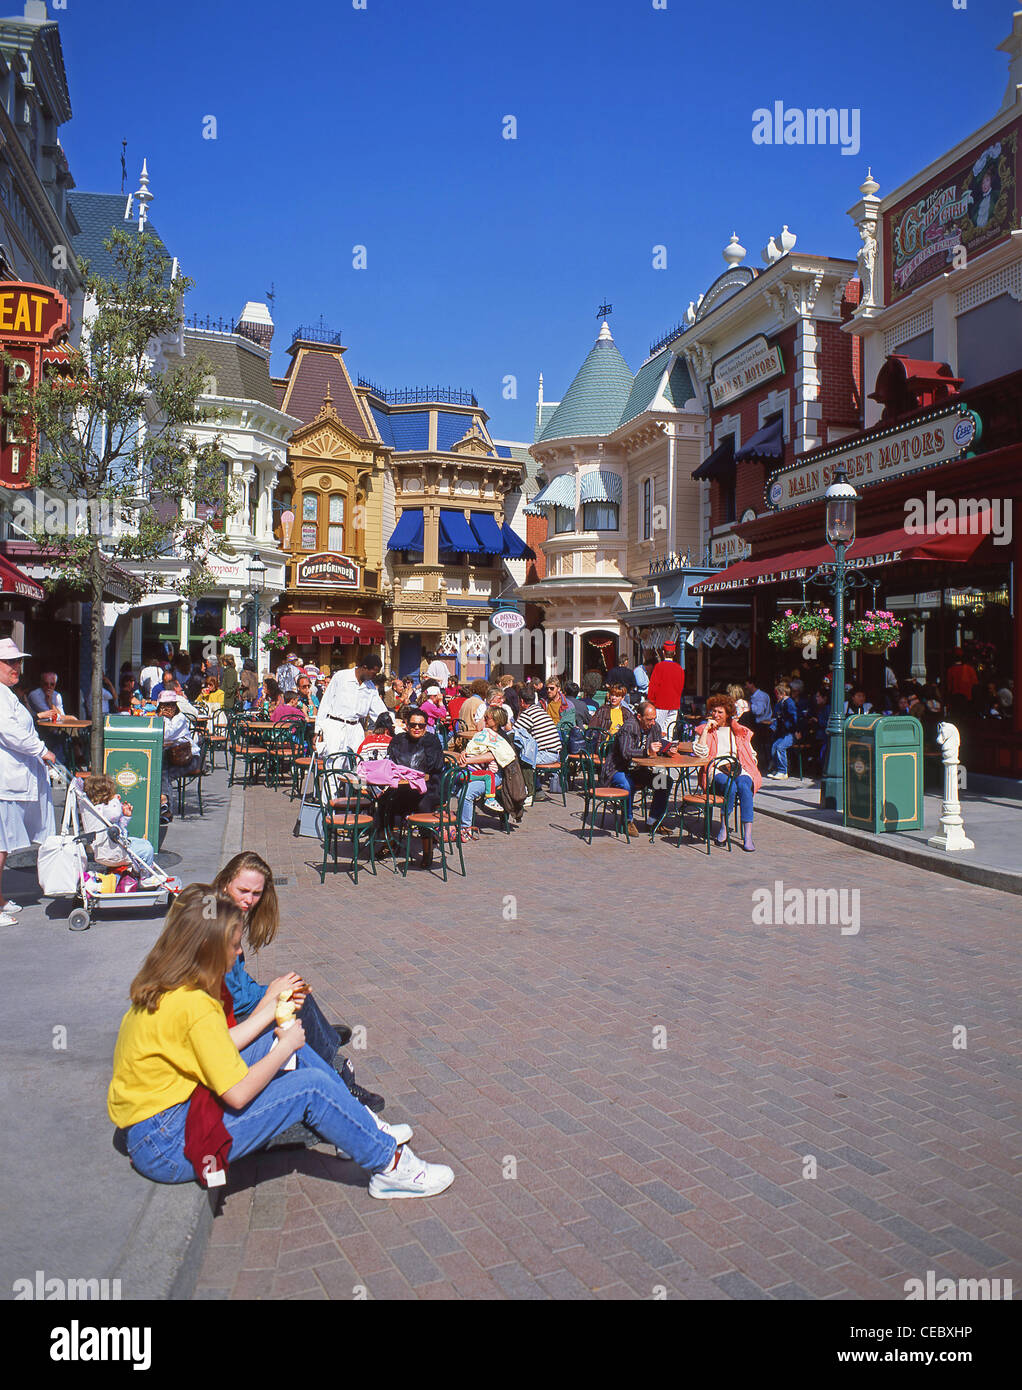 Main Street USA, Disneyland Paris theme park, Marne-la-Vallée, Île-de-France, France Stock Photo